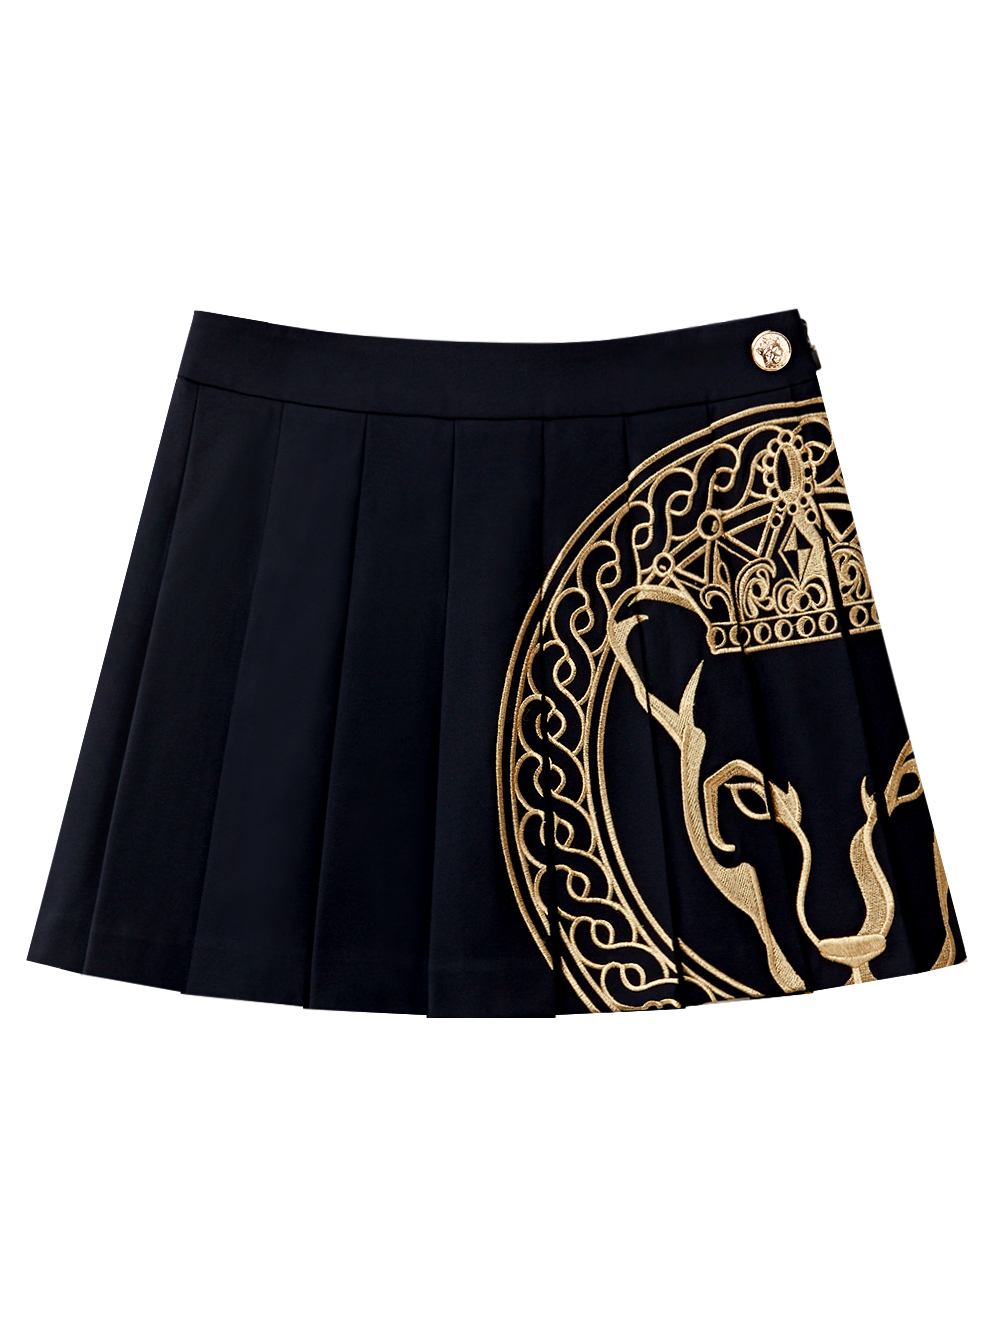 UTAA Golden Glossy Crown Panther Flare Skirt  : Black(UD1SKF167BK)